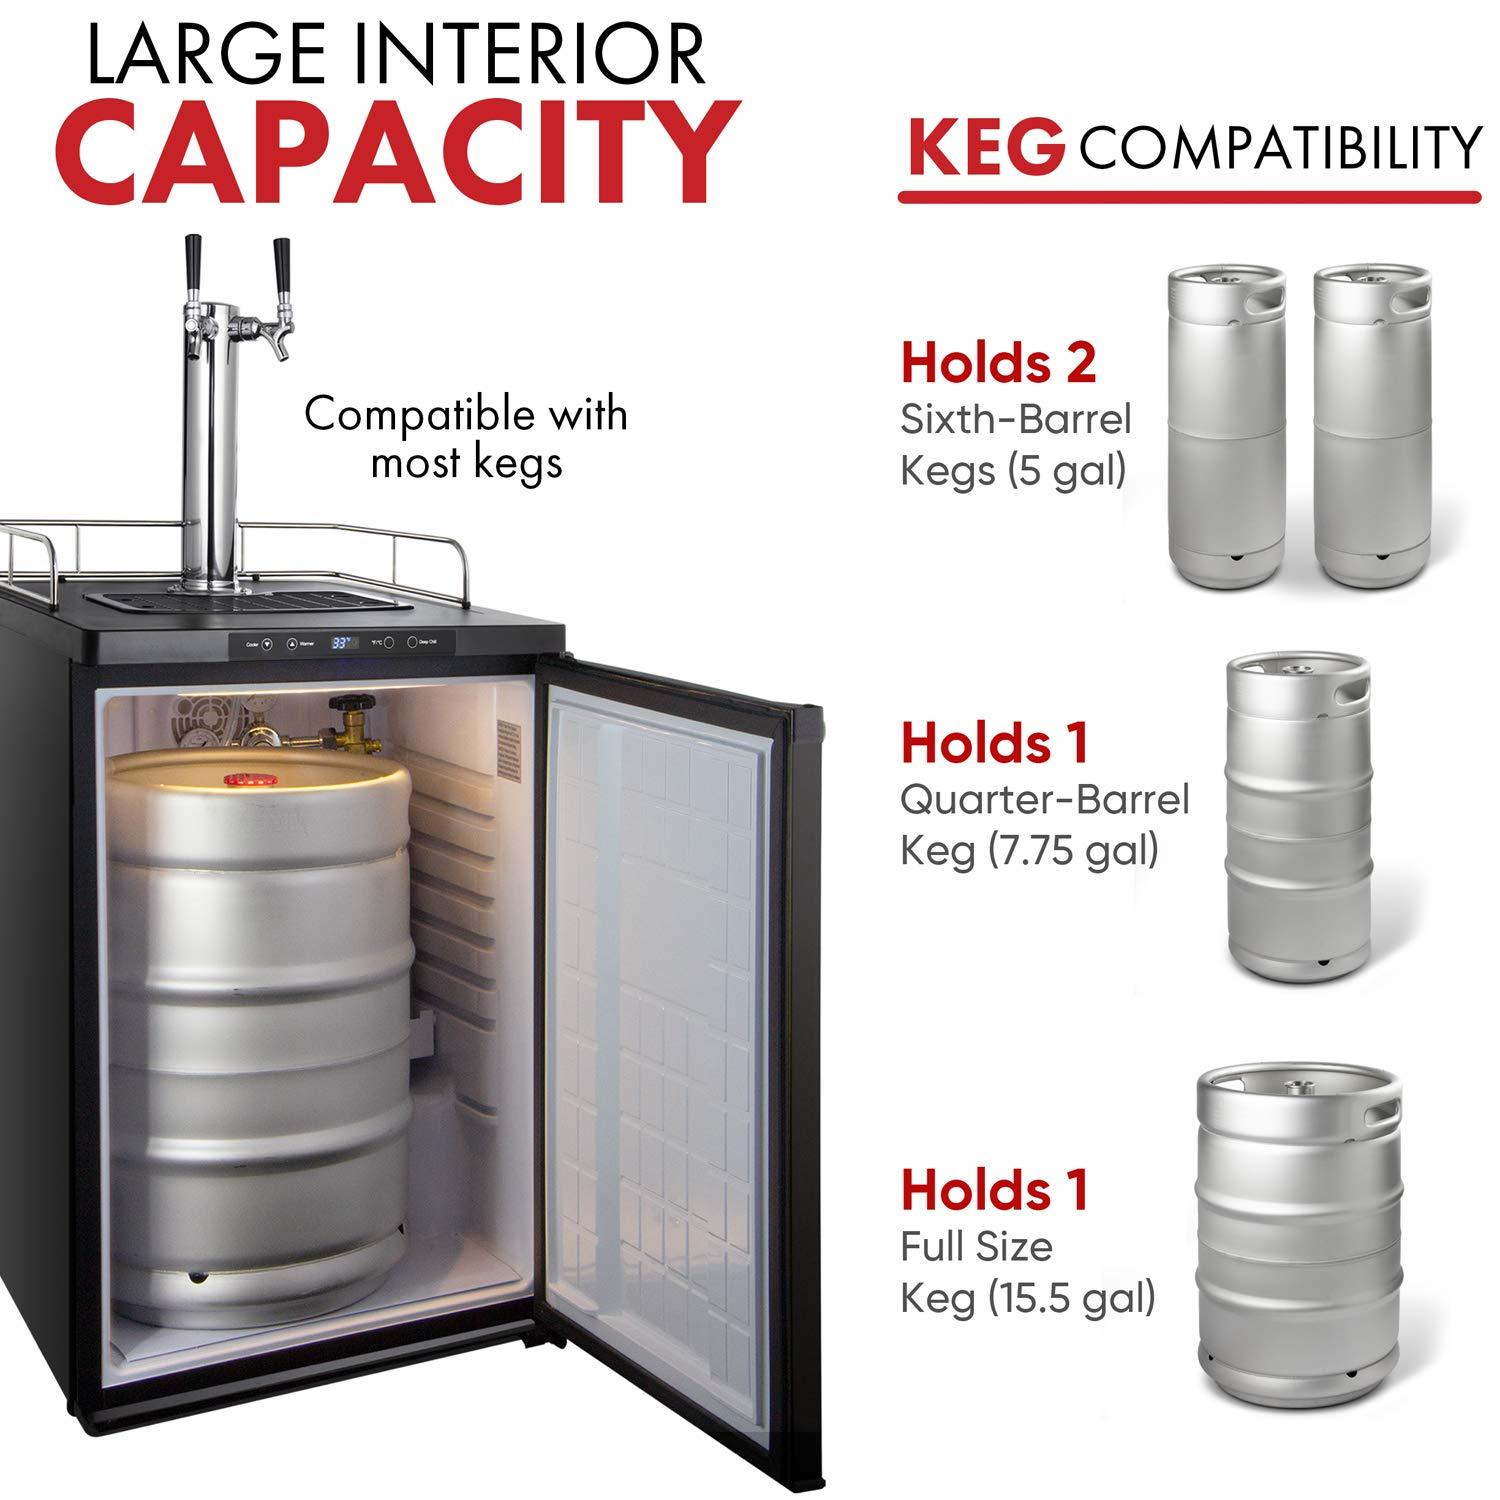 Kegco MDK-309SS-01 Keg Dispenser, Stainless Steel, 2 Tap - CookCave